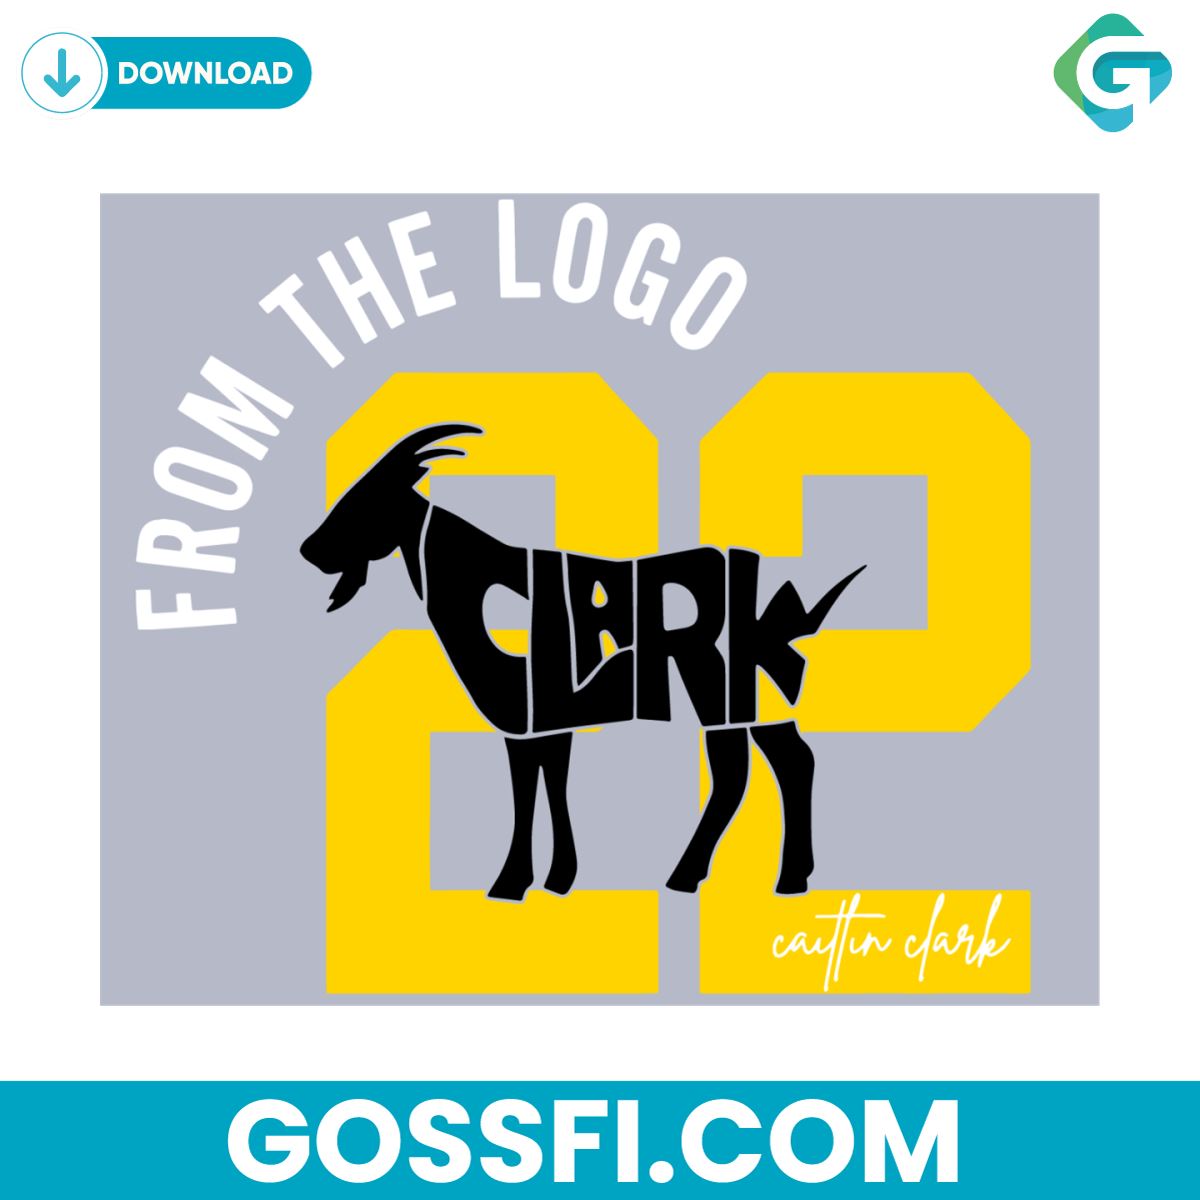 goat-clark-22-from-the-logo-svg-digital-download